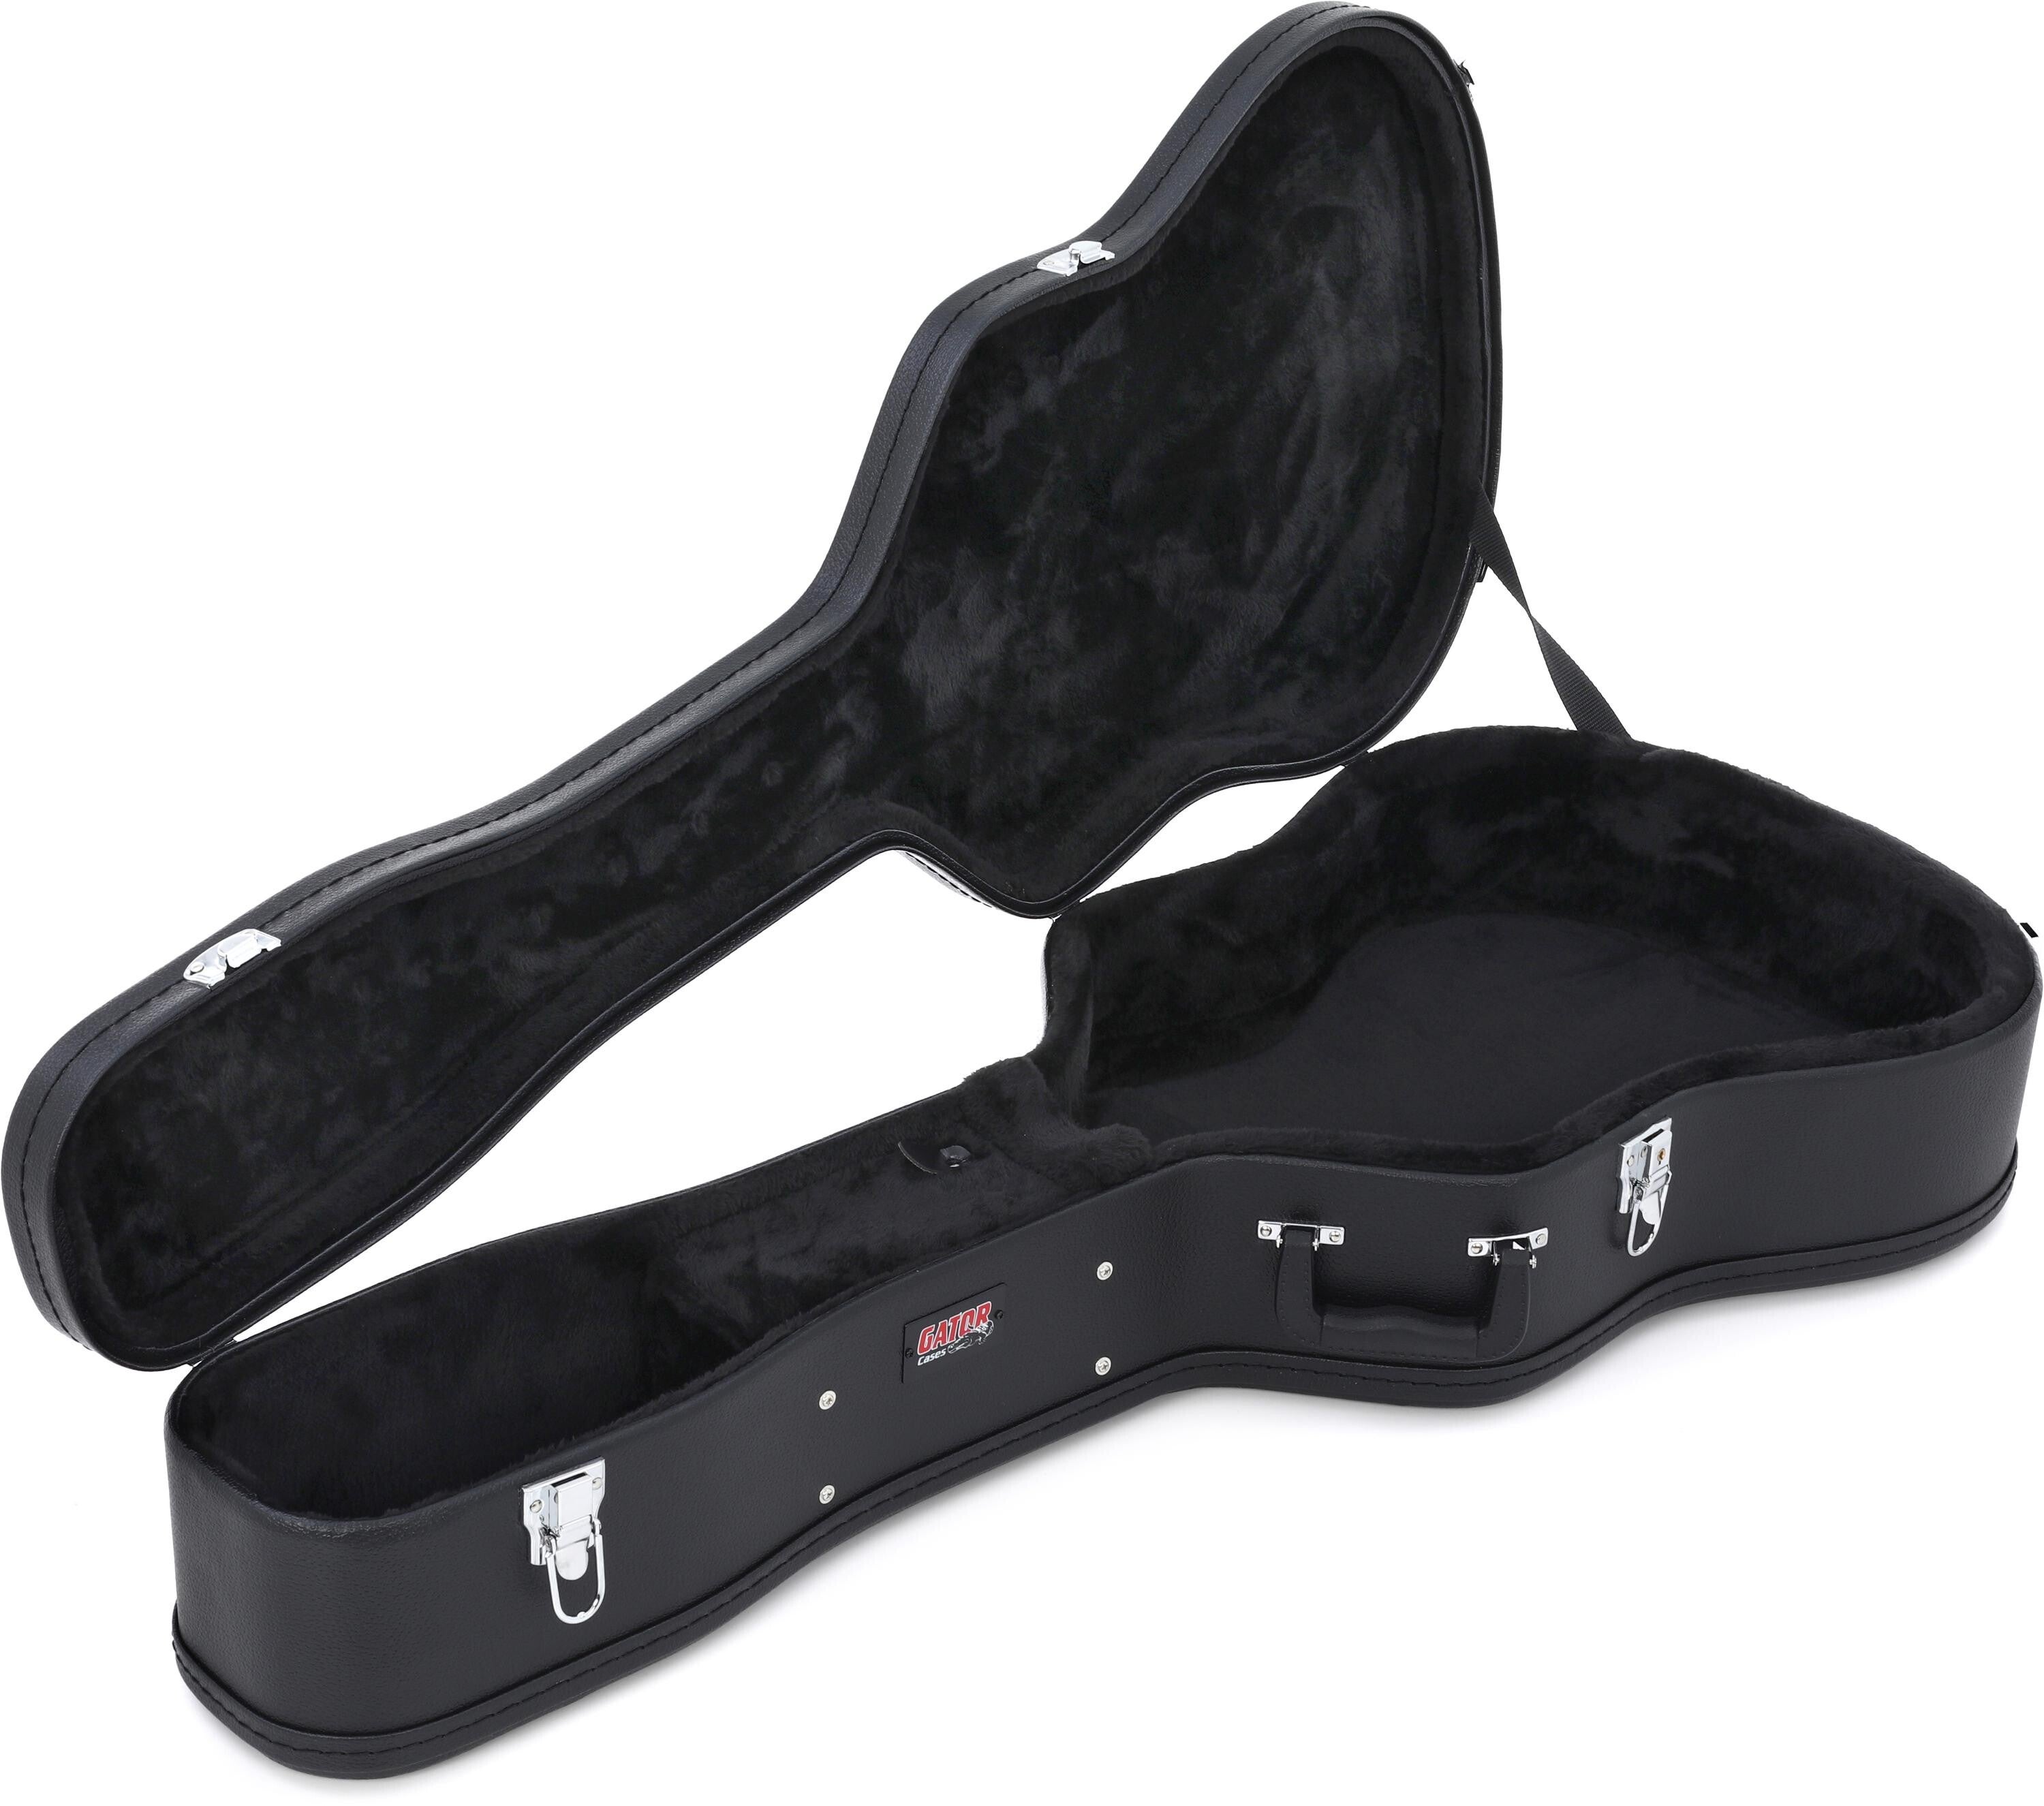 Bundled Item: Gator Economy Wood Case - 12-string Acoustic Dreadnought Guitar Case